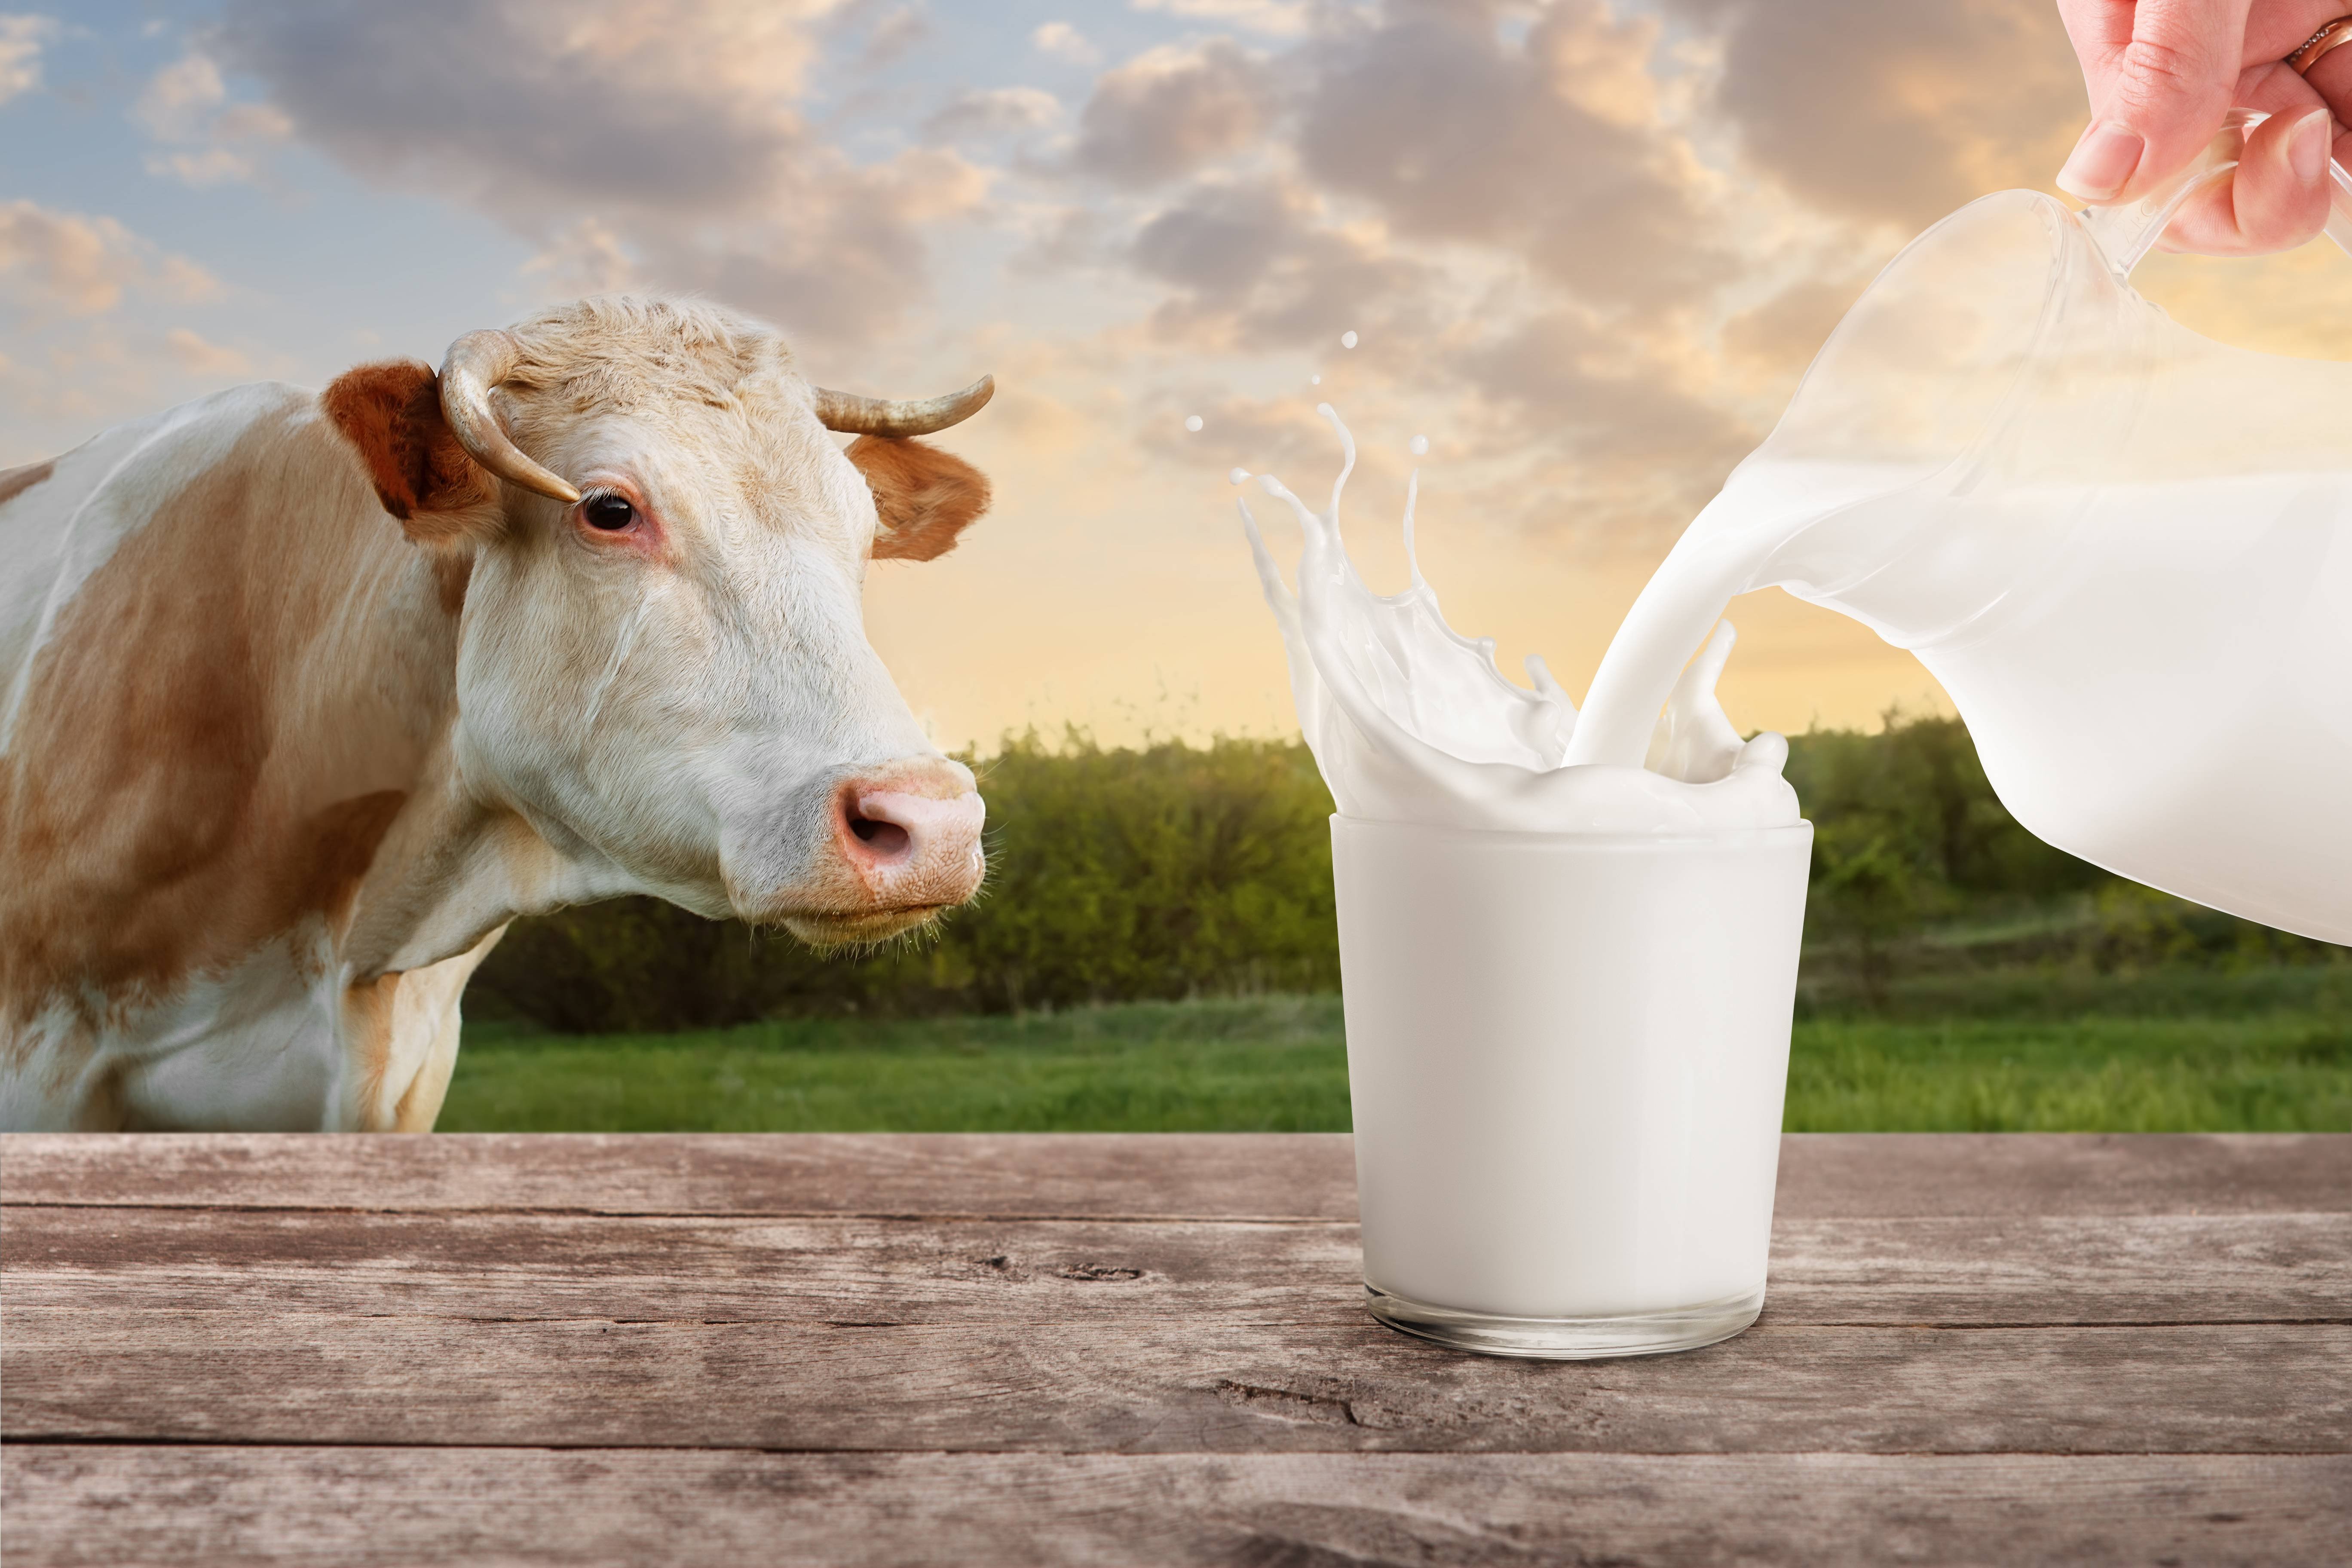 Покажи картинку молока. Молоко. Коровье молоко. Корова. Красивая корова.